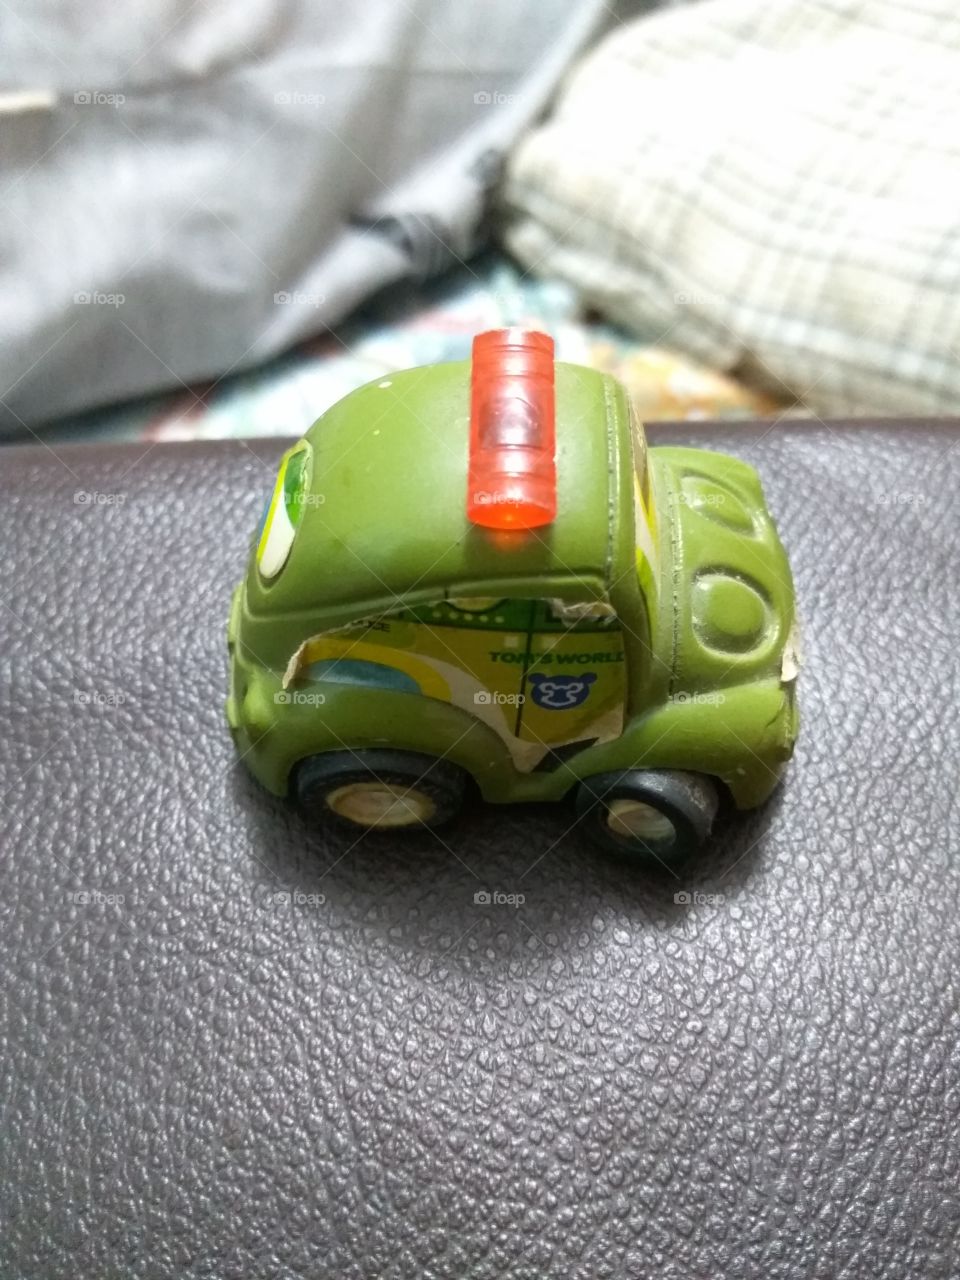 Green vw beetle car toy